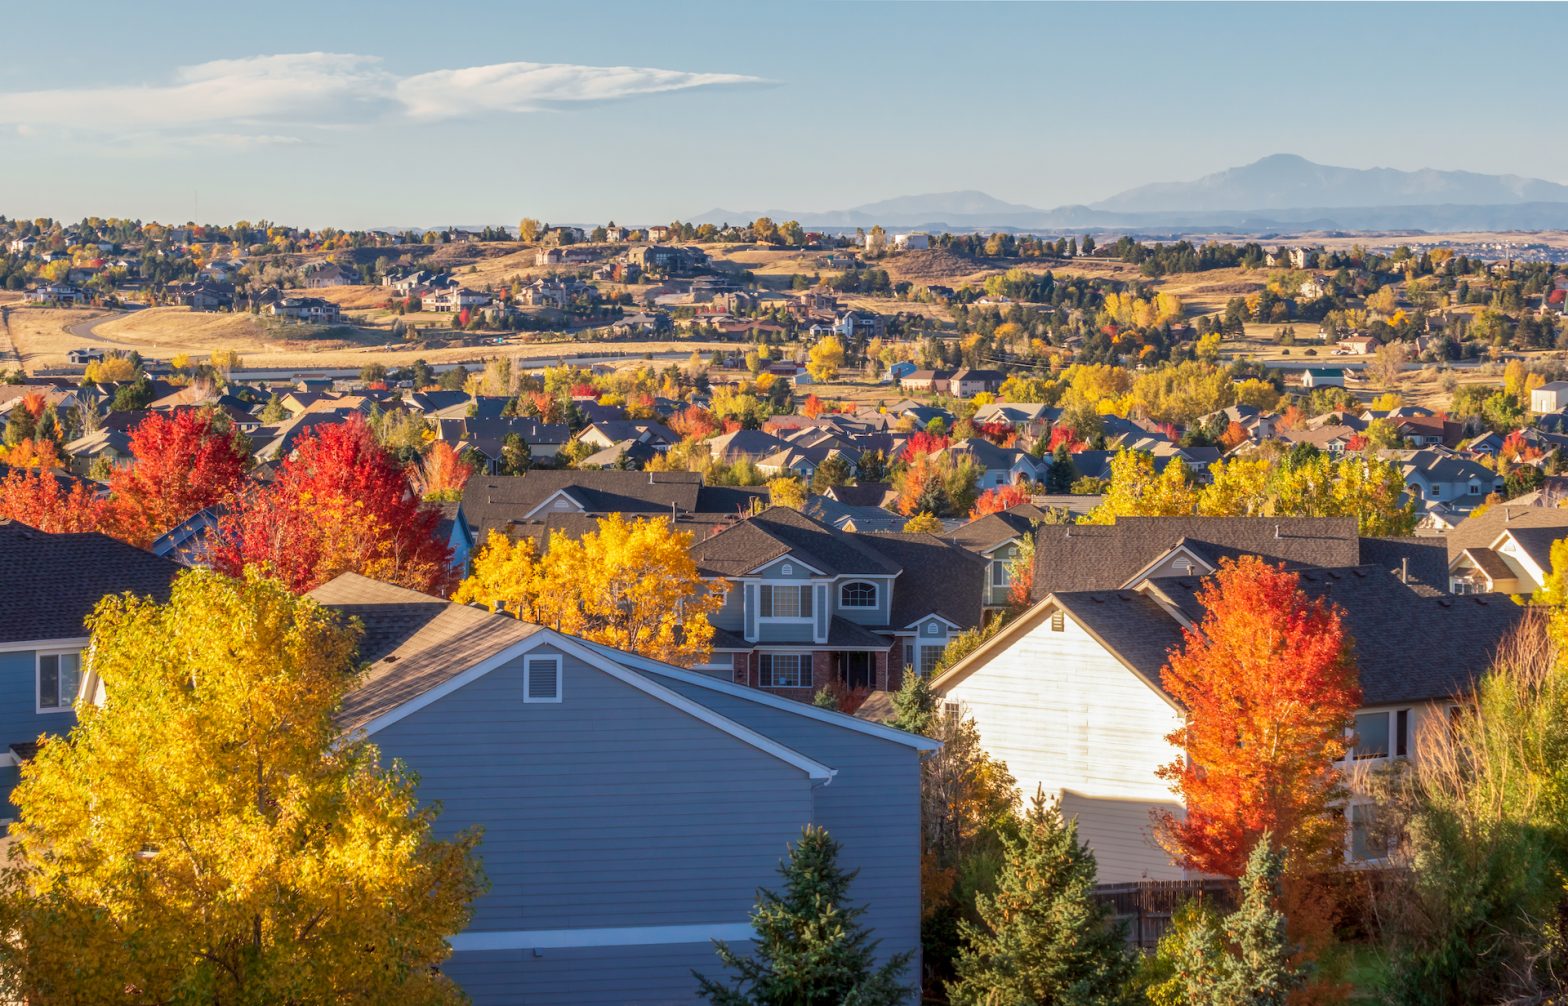 Homes in Centennial, Colorado during the fall